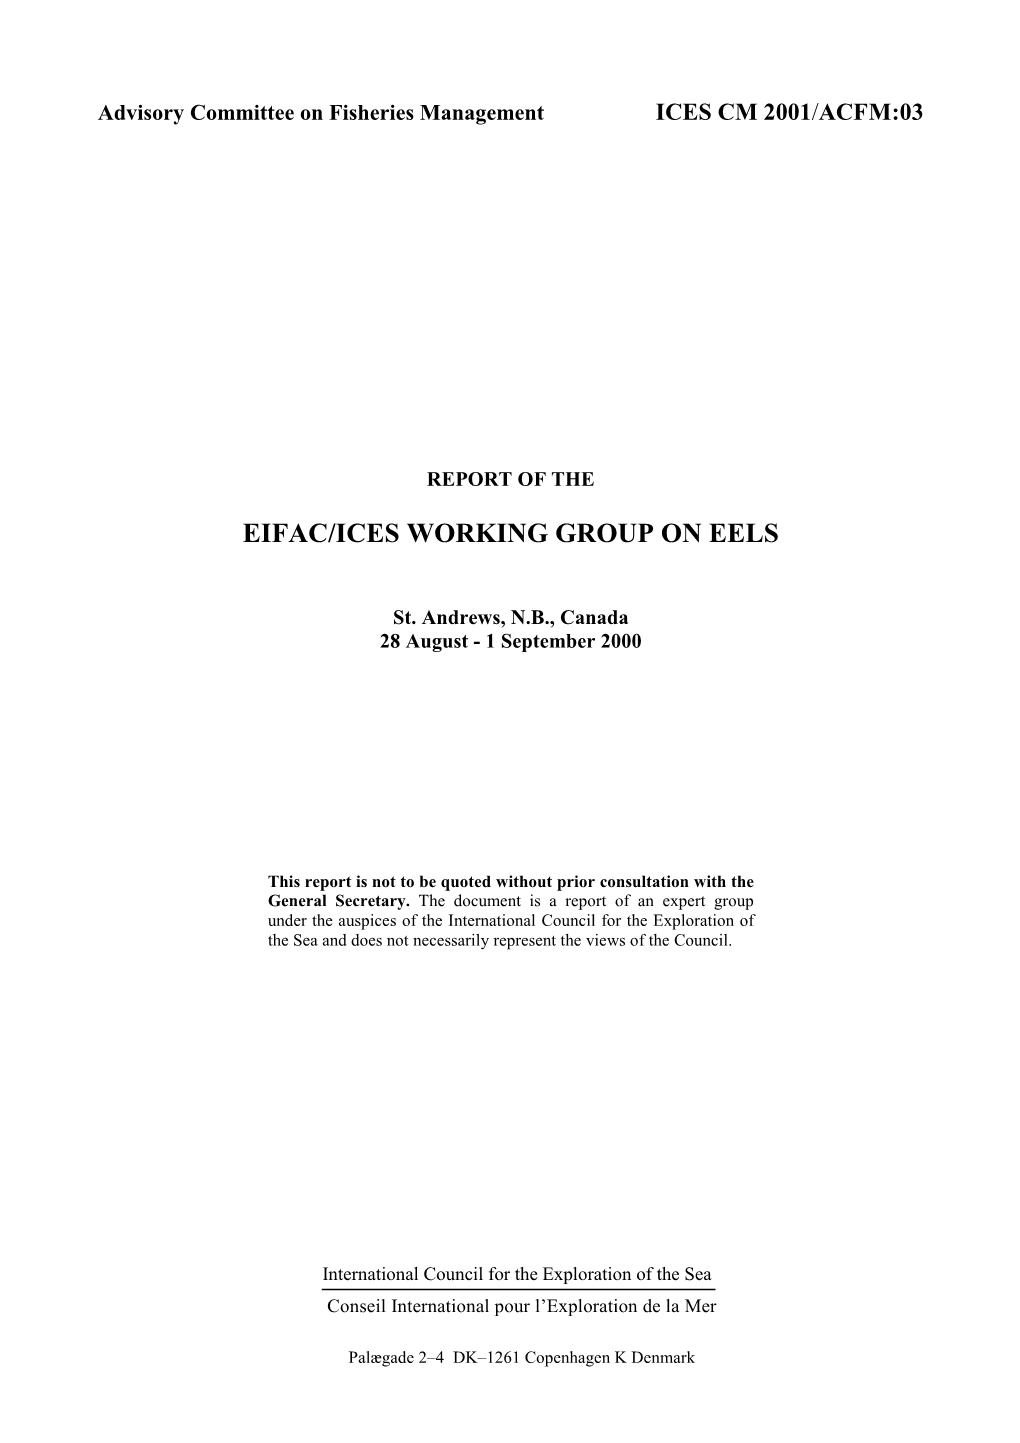 EIFAC/ICES Working Group on Eels (WGEEL) CM2001/ACFM:03